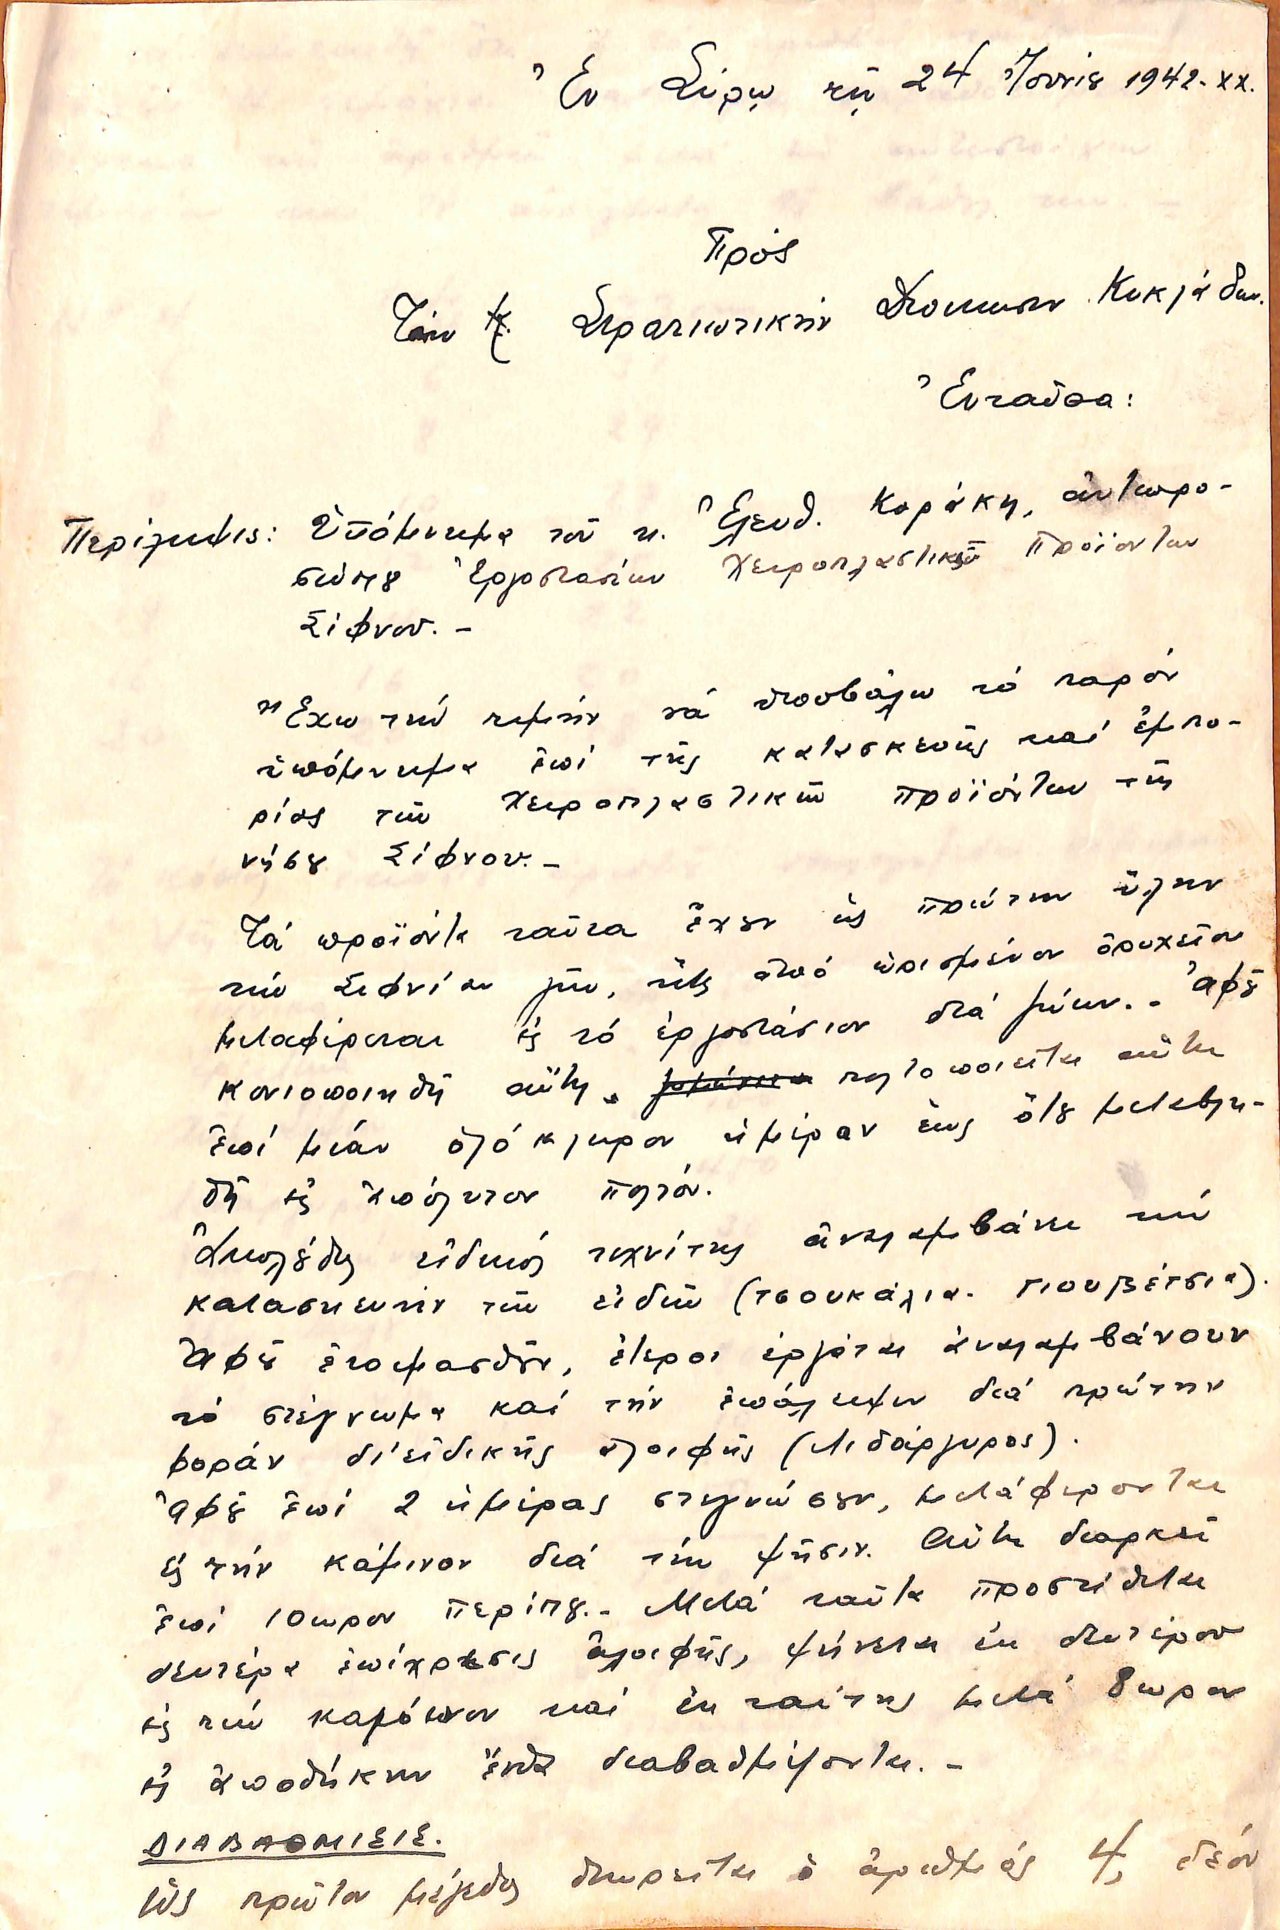 Correspondence between Eleftherios Korakis and the Italian authorities, June 24 1942 (1/4).